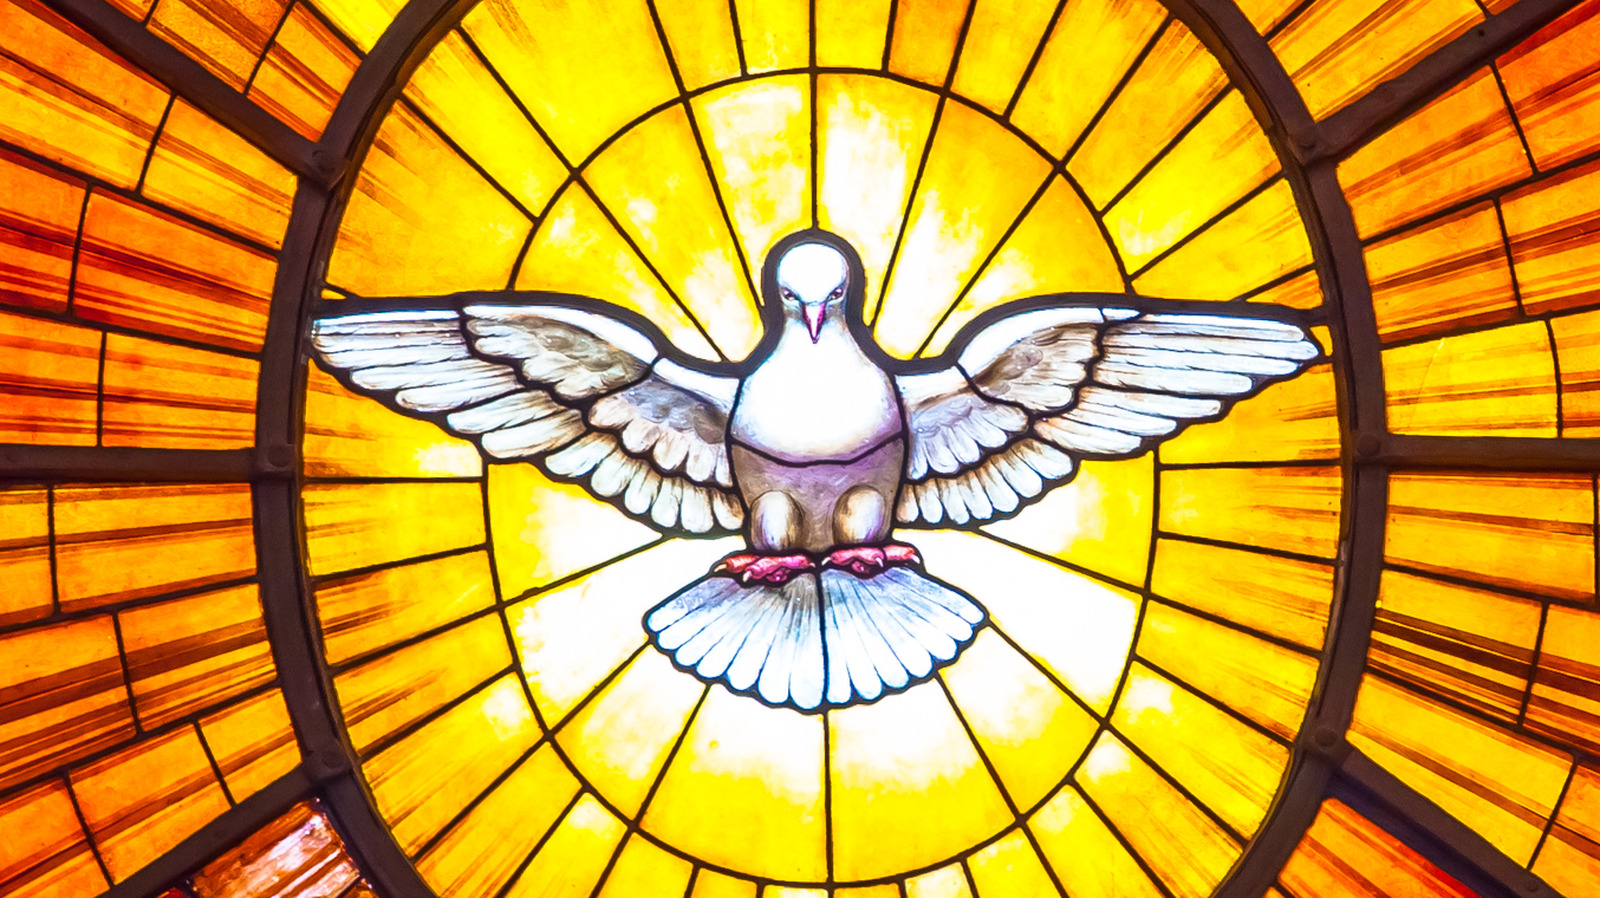 Lin Sherrill: The Holy Spirit